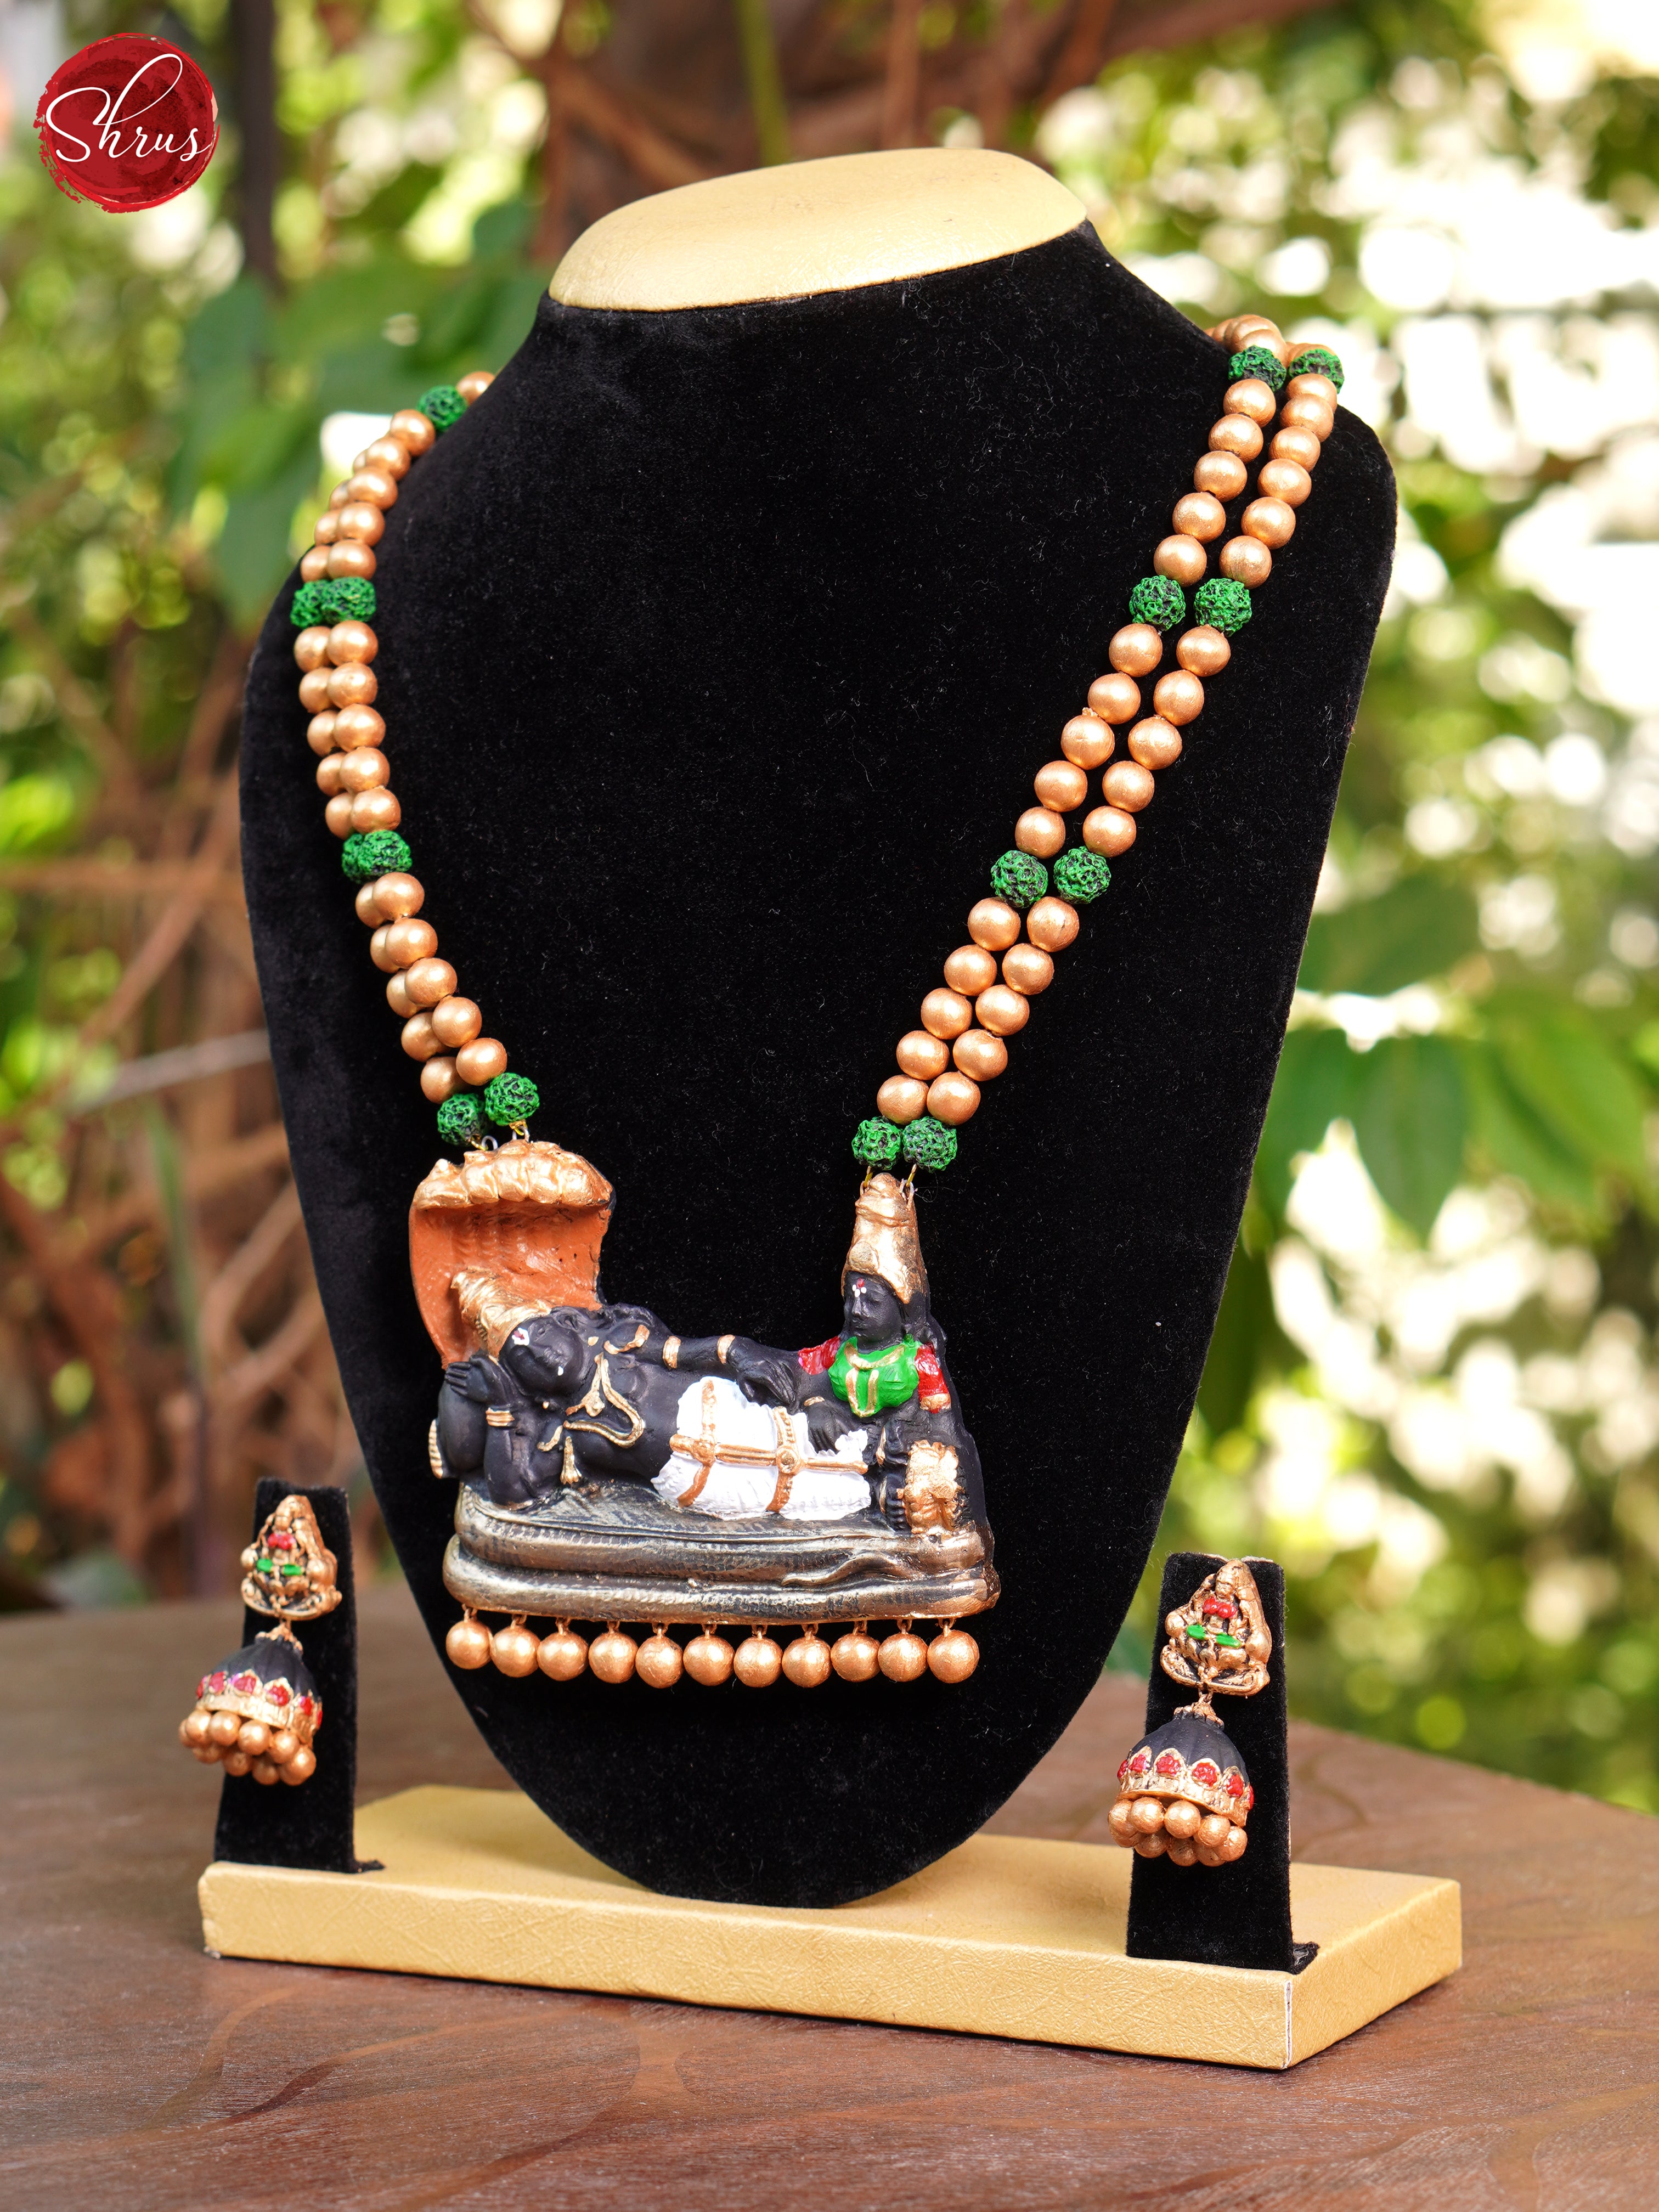 Handcrafted Lord Vishnu  Terra cotta Jewellery with Jhumkas- Accessories - Shop on ShrusEternity.com